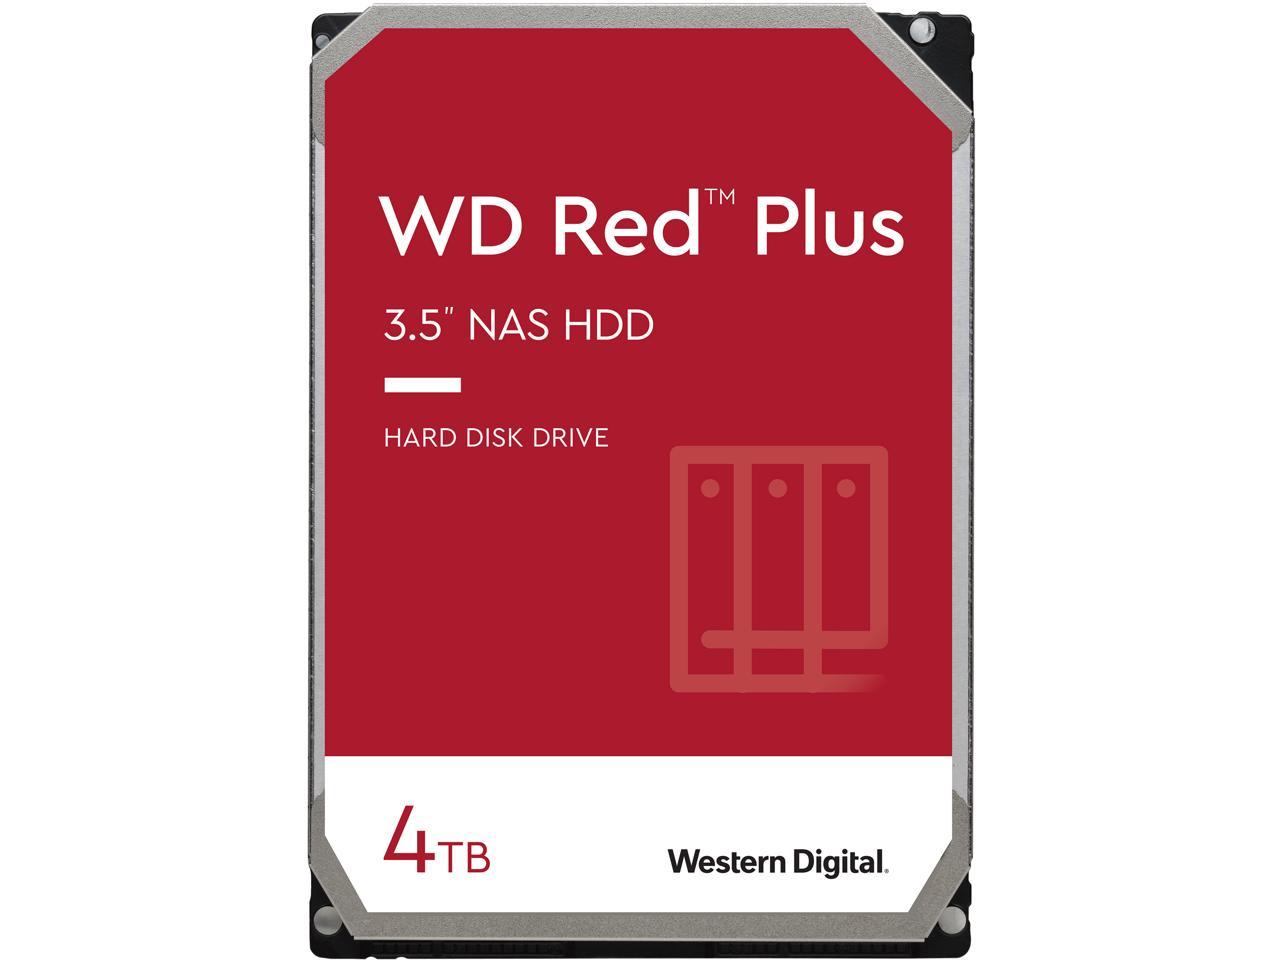 4TB WD Red Plus NAS Hard Drive $70